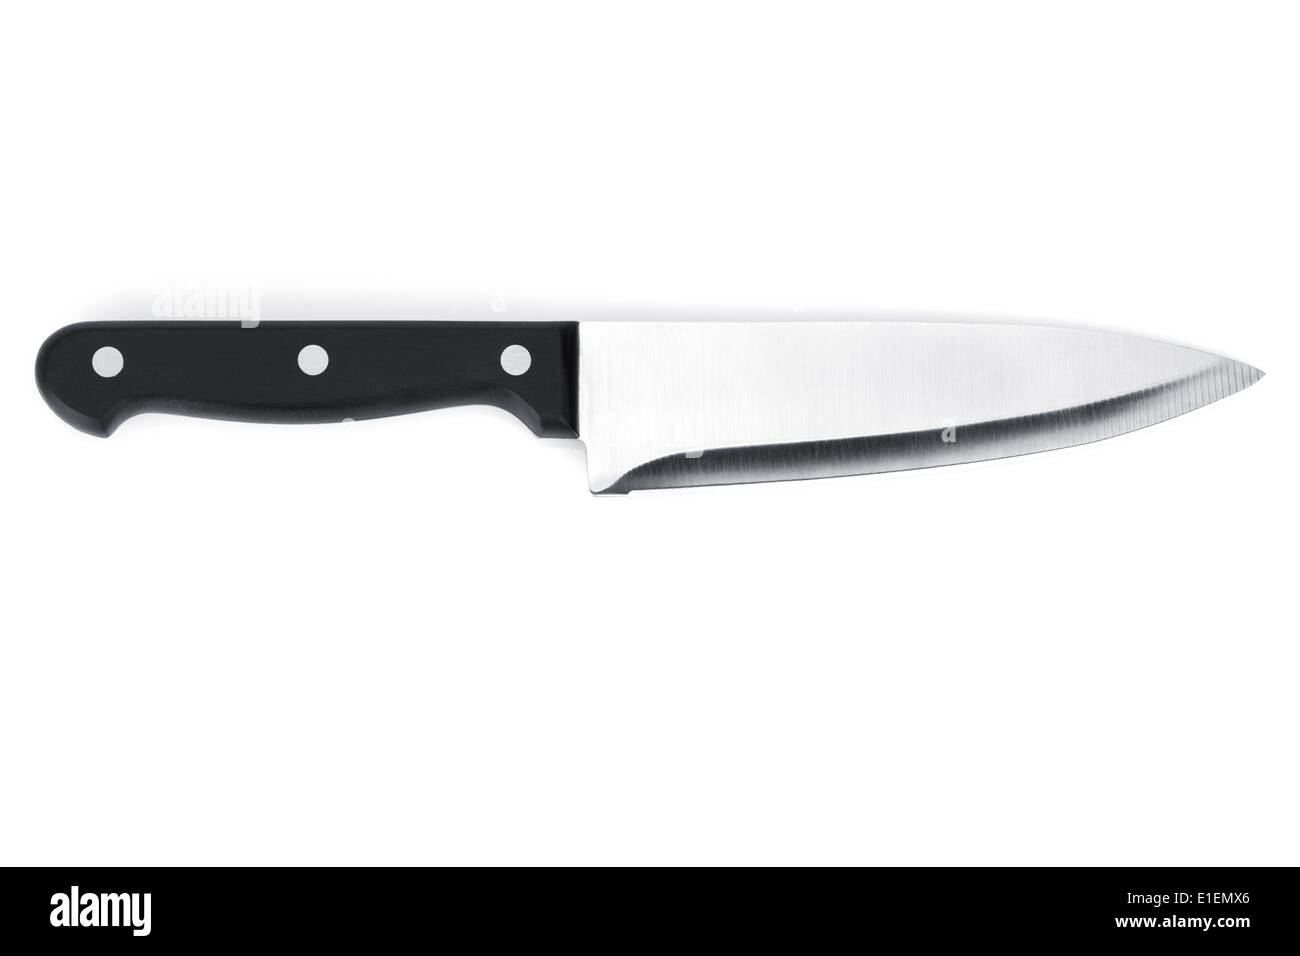 https://c8.alamy.com/comp/E1EMX6/chef-knife-isolated-on-white-background-E1EMX6.jpg